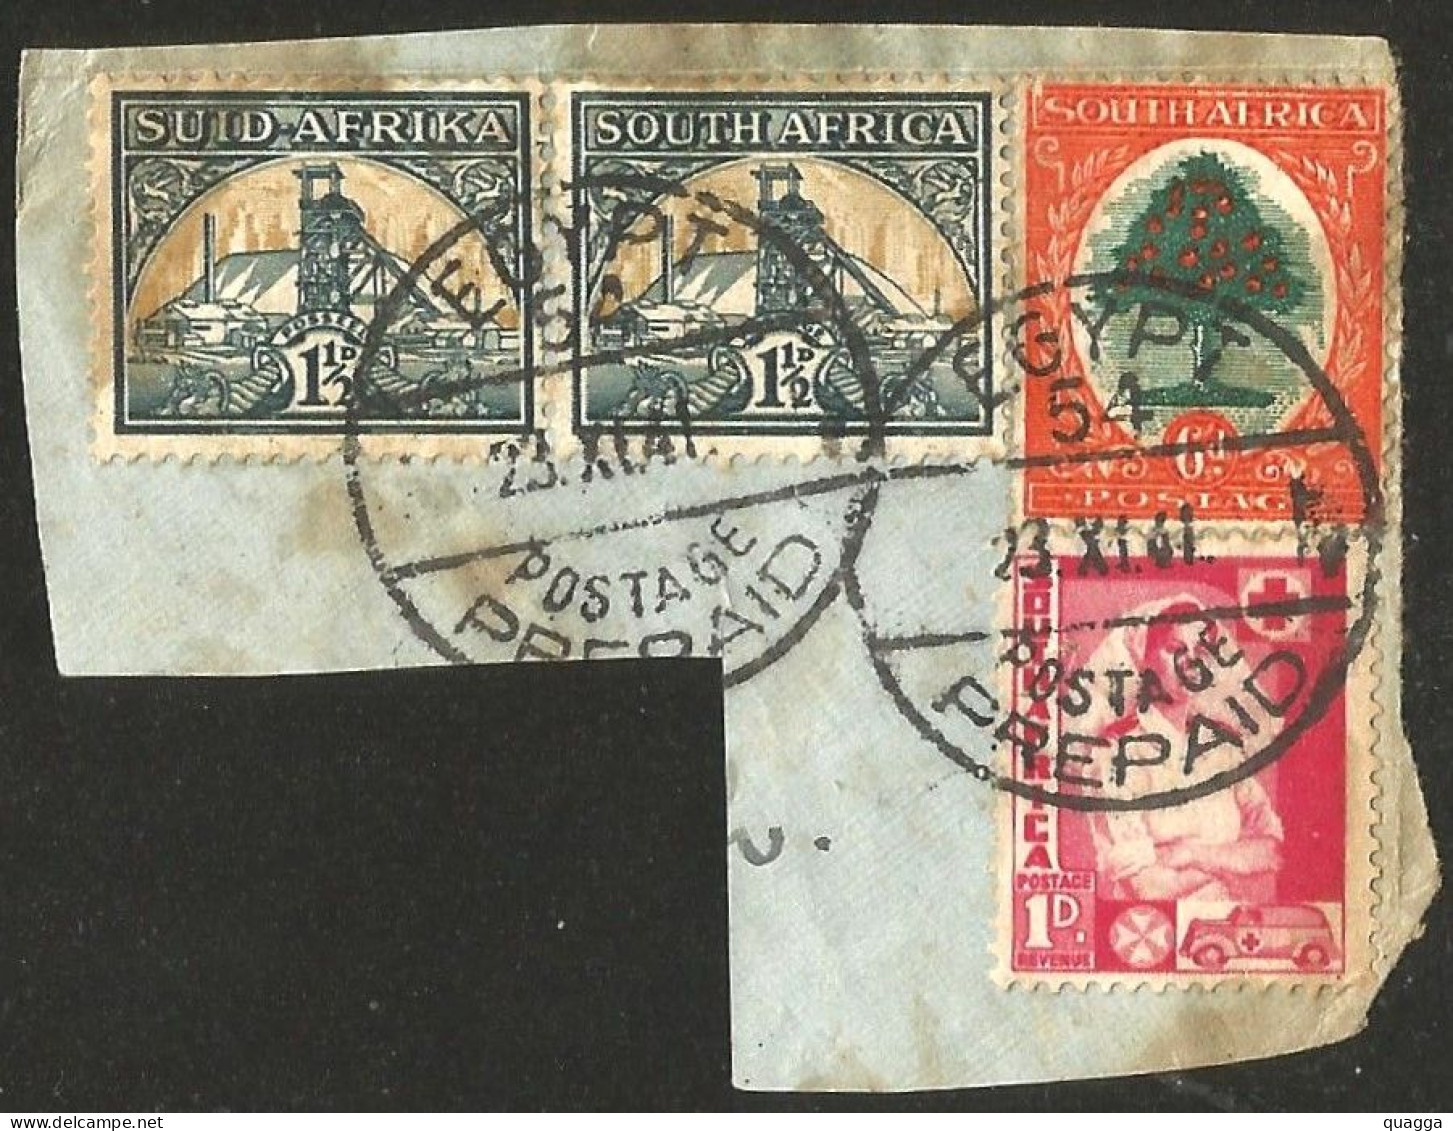 South Africa 1941-45. EGYPT 54 POSTAGE PREPAID Postmark. - Oblitérés